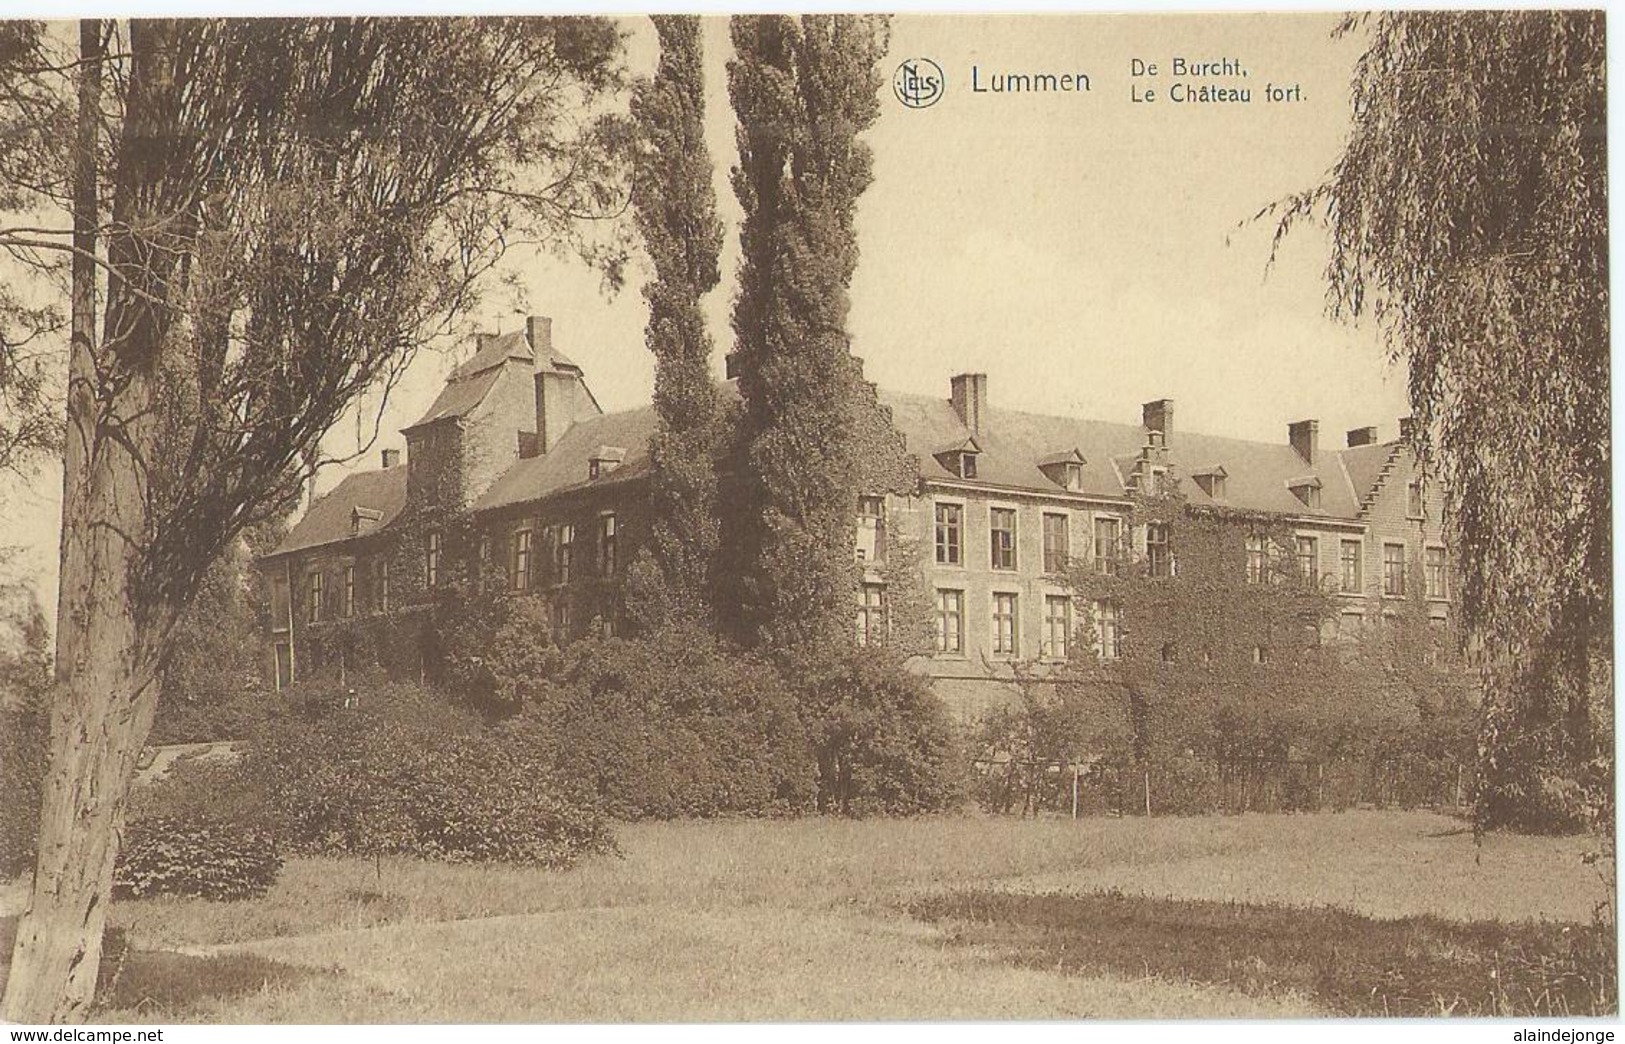 Lummen - De Burcht - Le Château Fort - Uitg. Brems, Drukker, Herck-de-Stad - Lummen